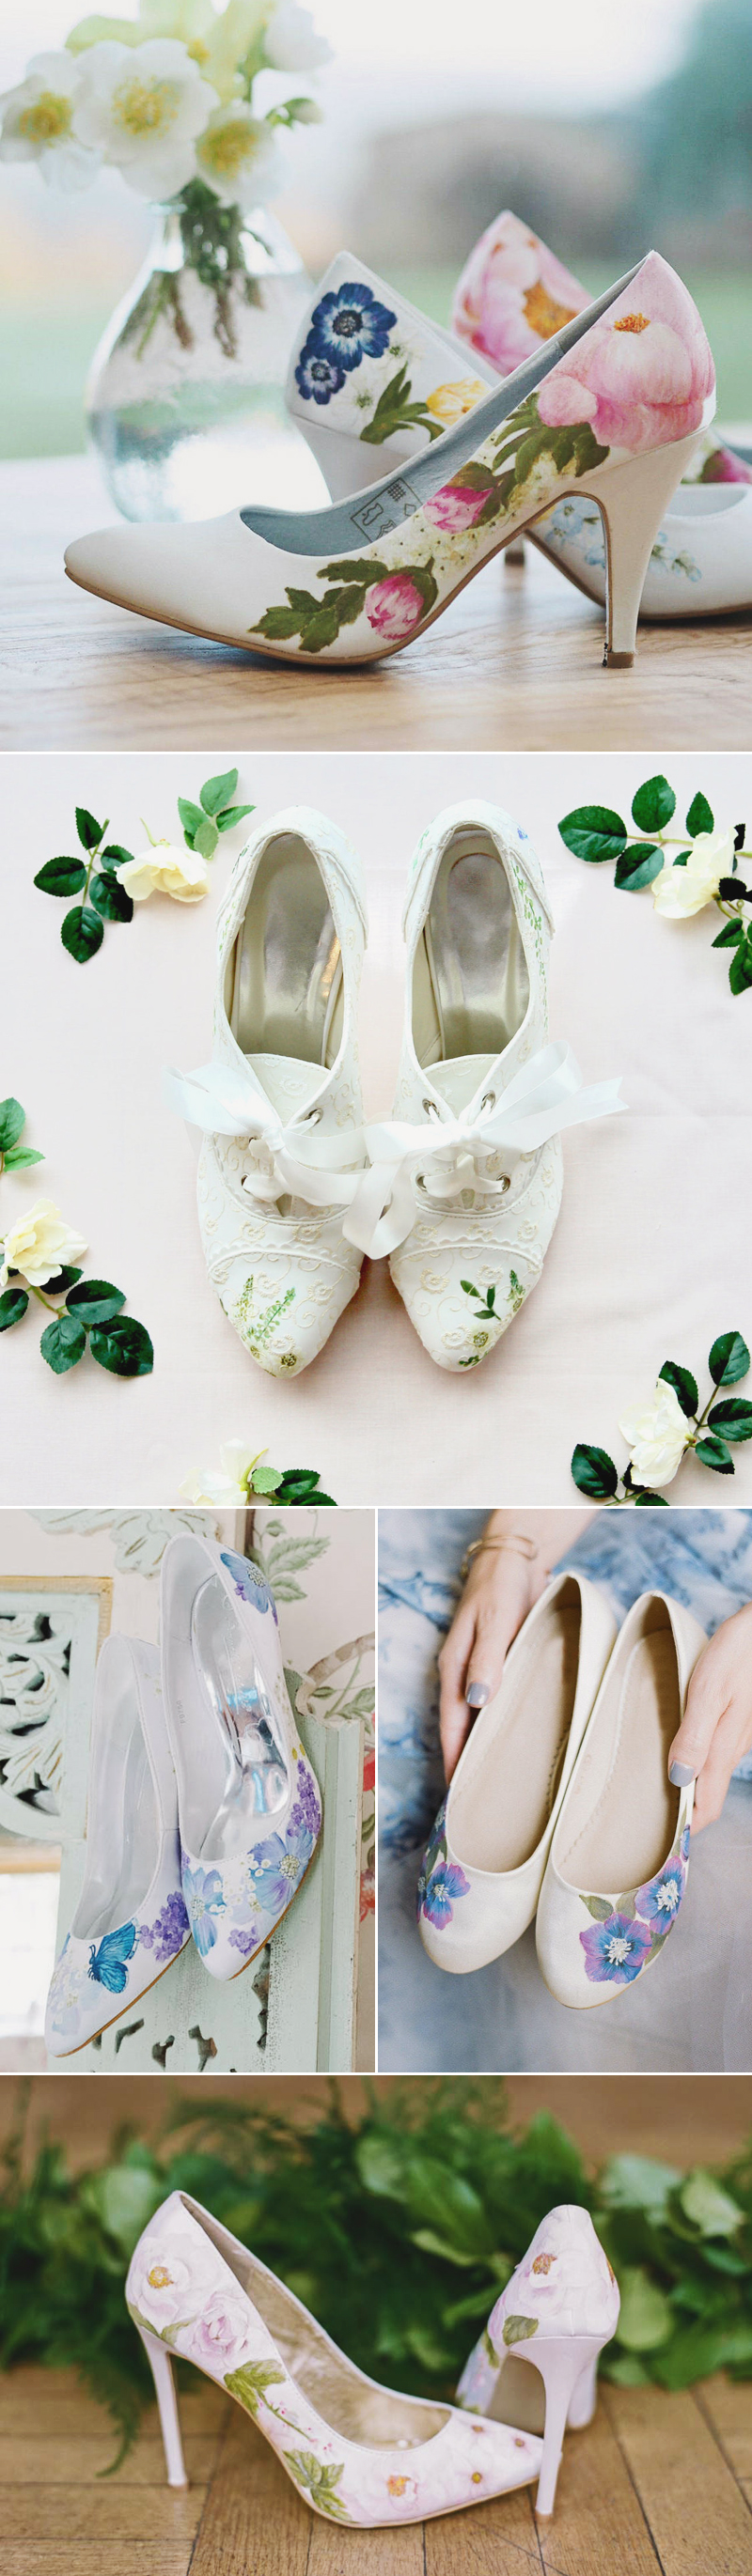 bespoke wedding shoes